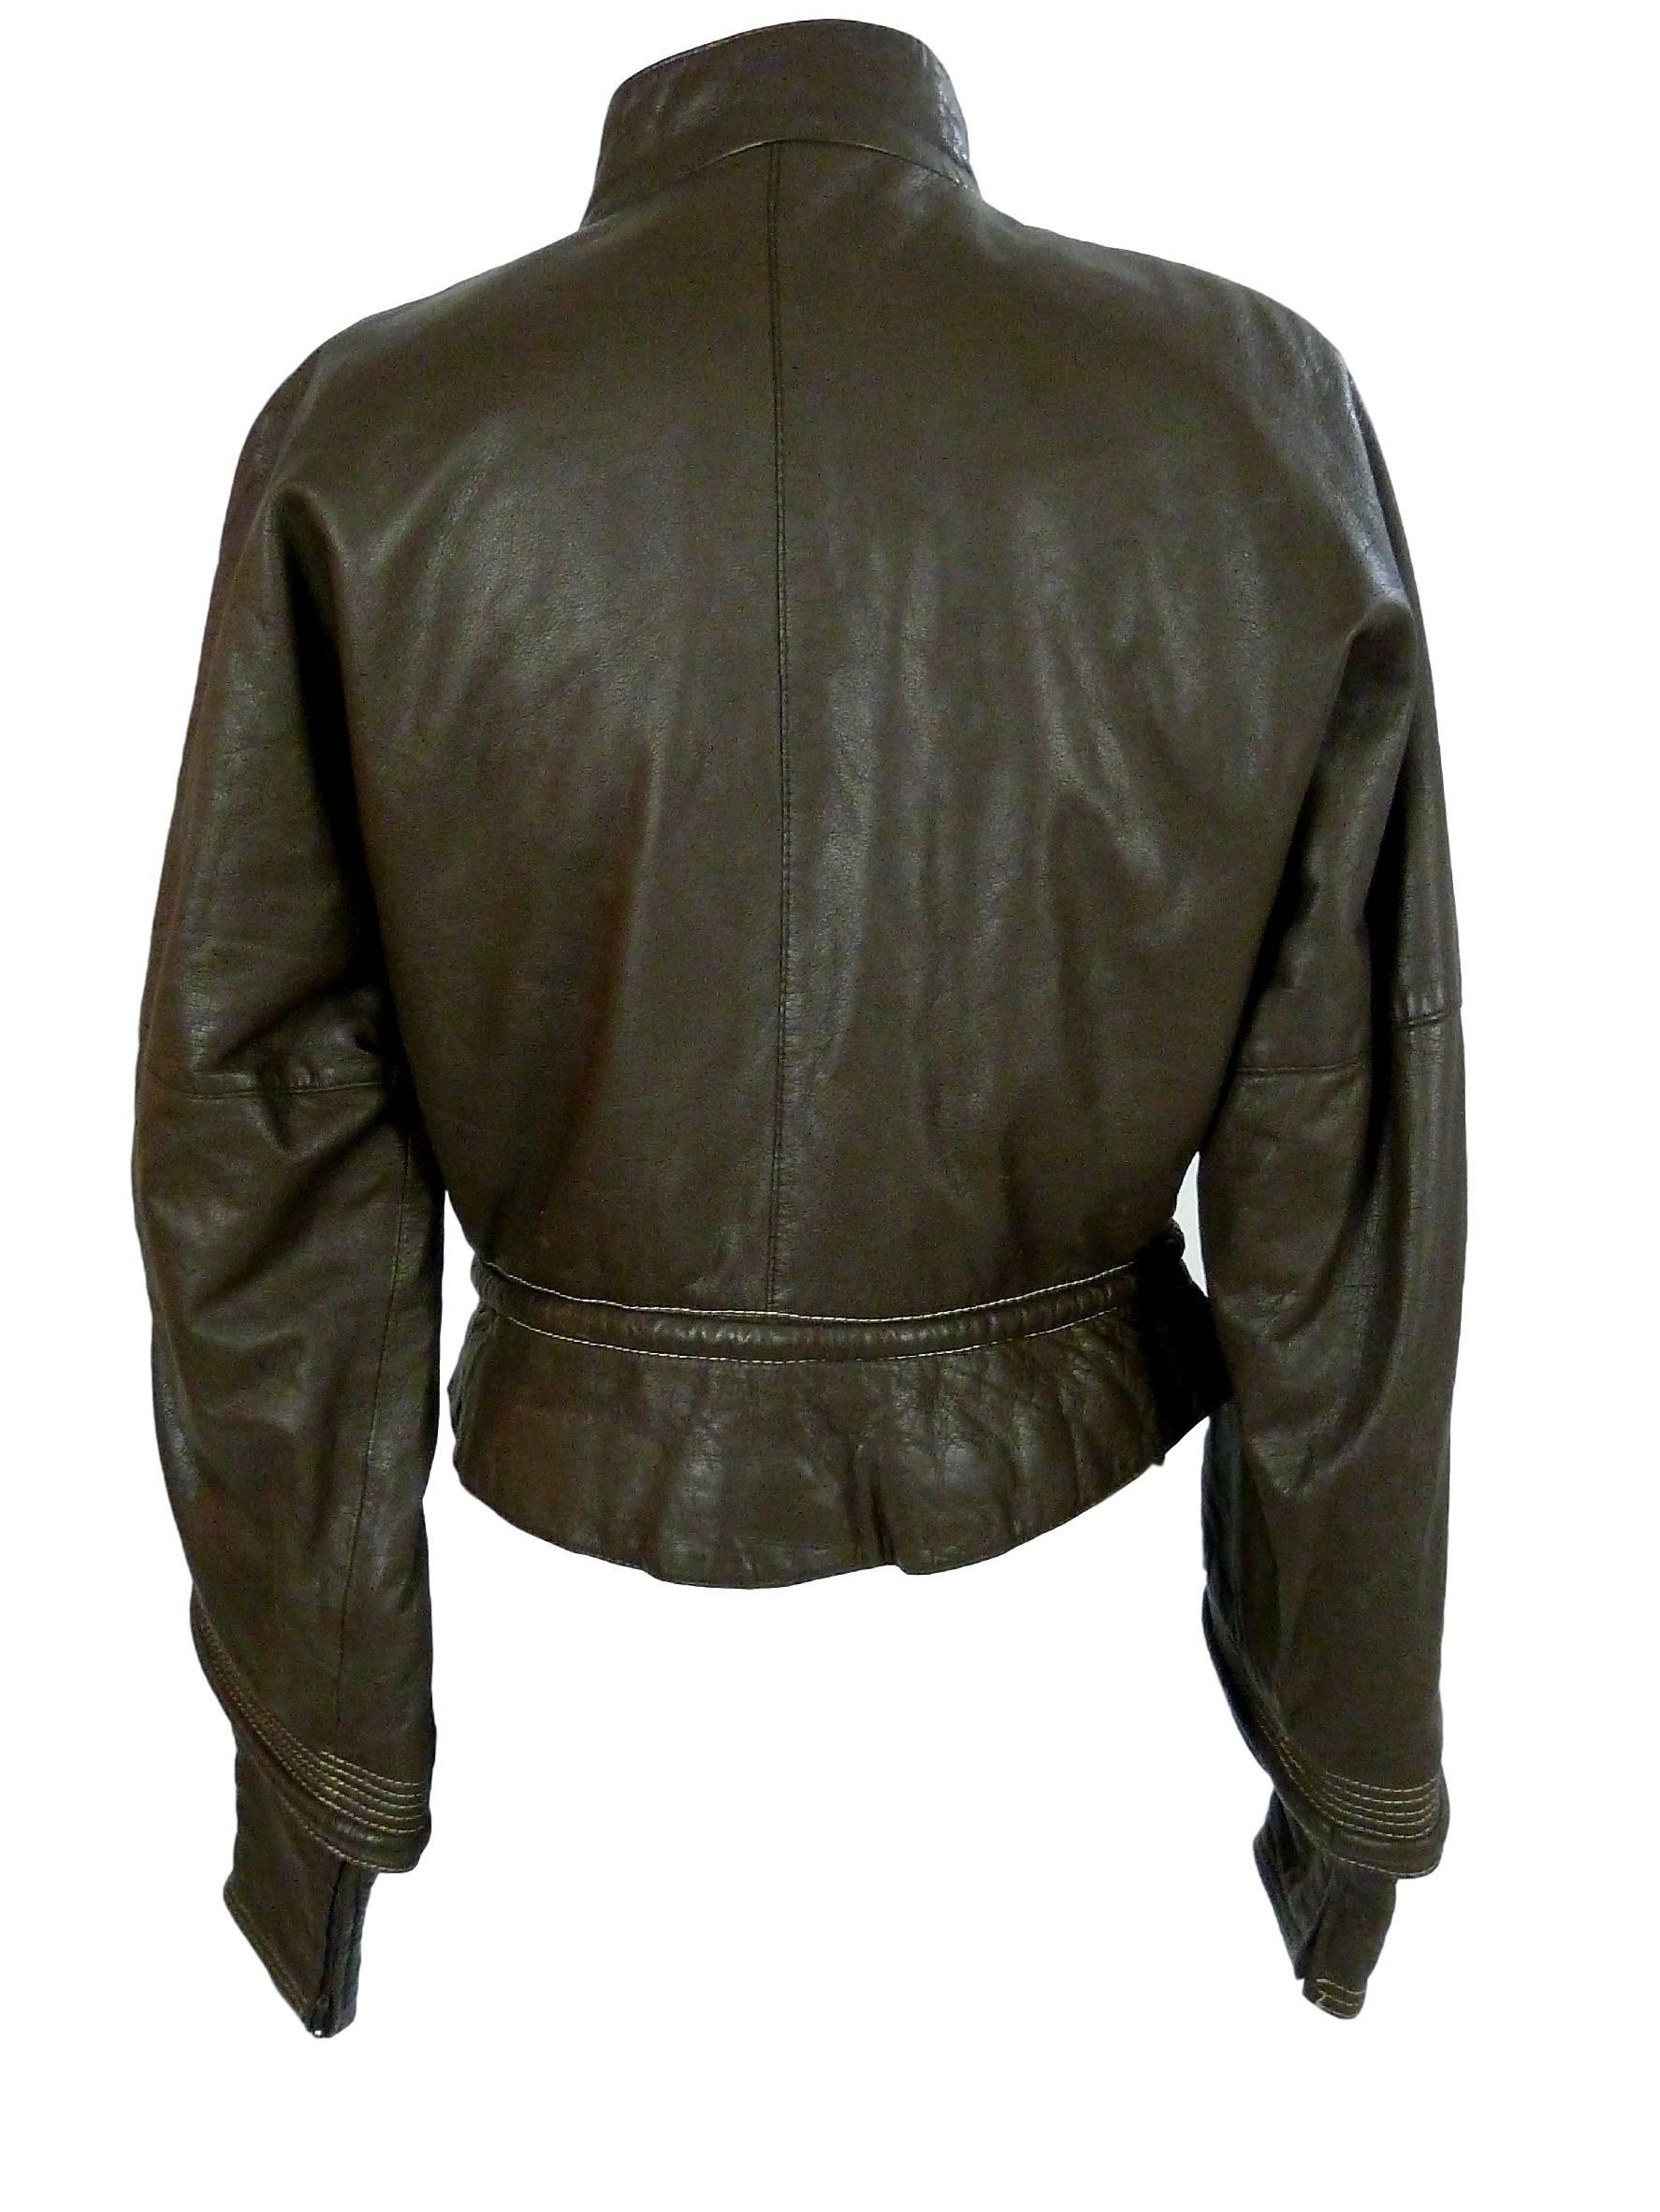 Women's Gianfranco Ferrè vintage 1980s women's brown leather motorcycle jacket size 46 For Sale